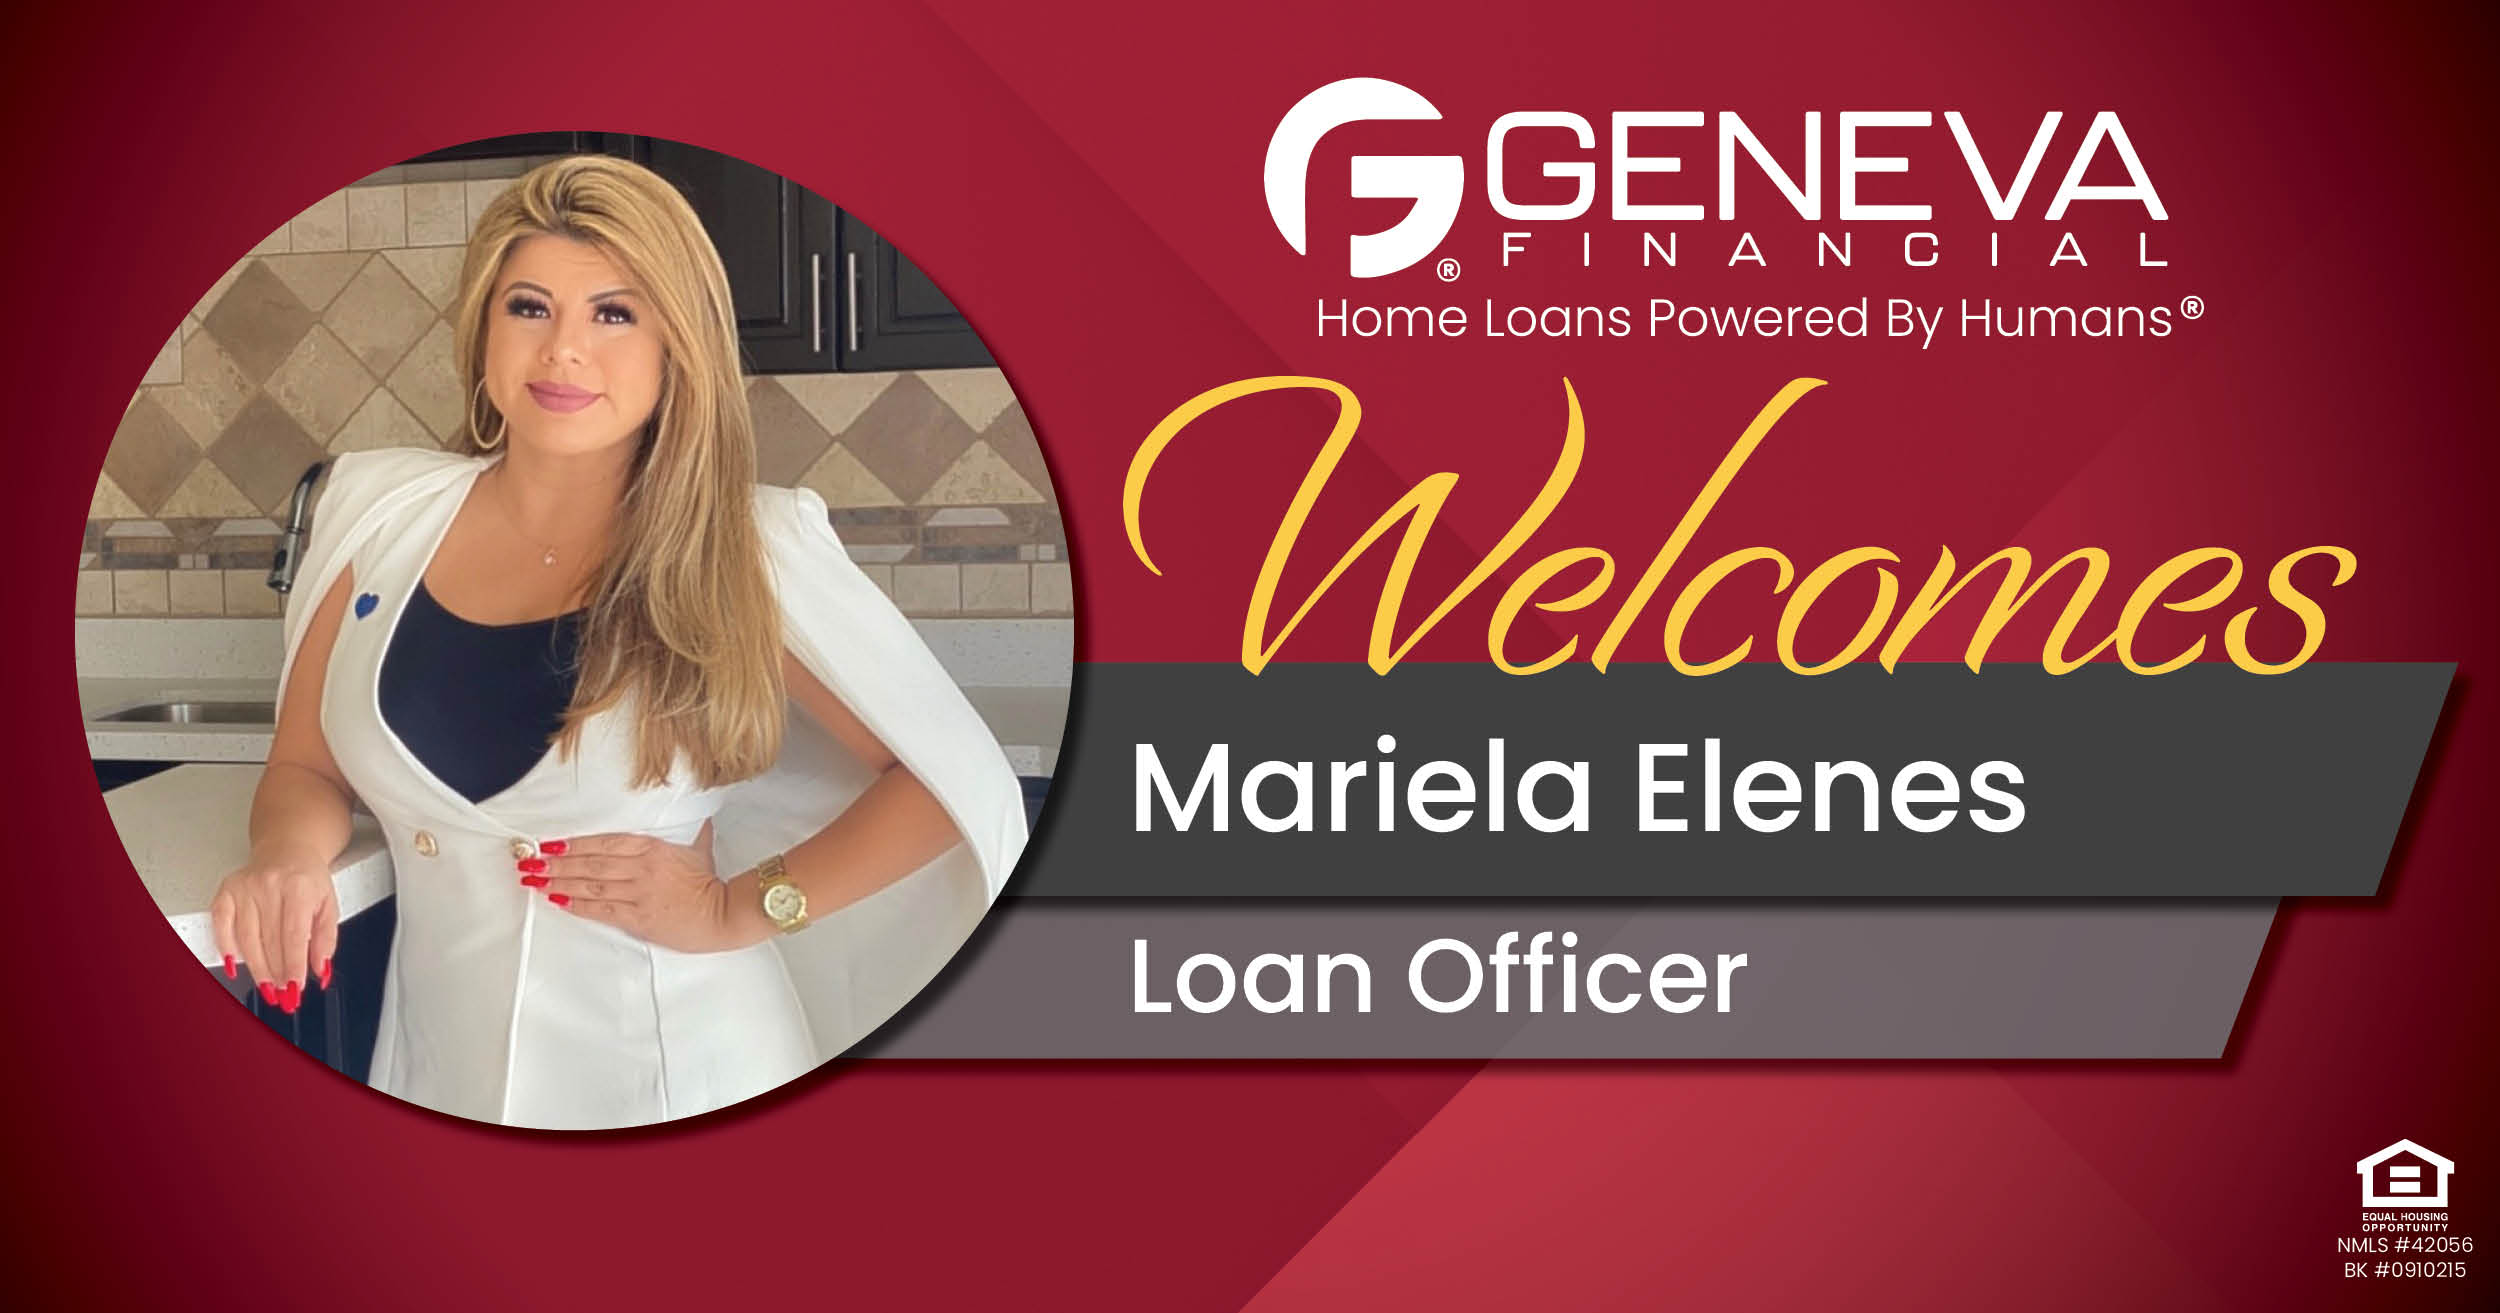 Geneva Financial Welcomes New Loan Officer Mariela Elenes to Phoenix, Arizona– Home Loans Powered by Humans®.